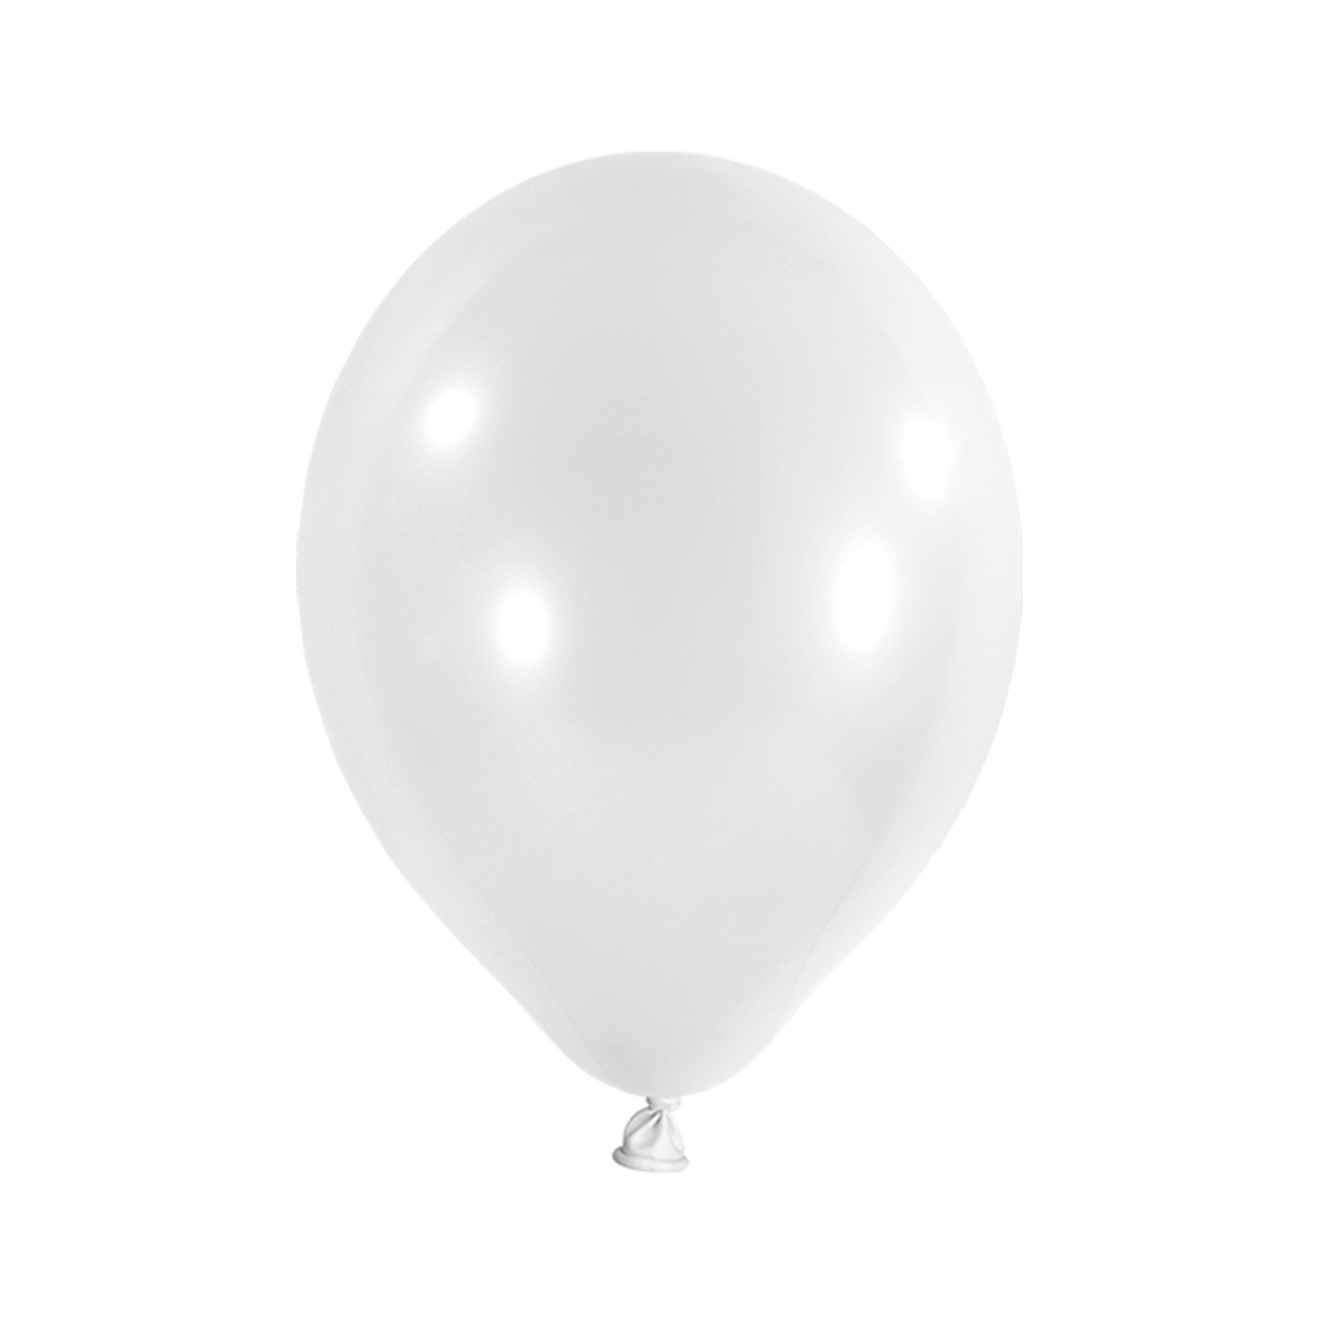 50 Luftballons - Ø 30cm - Metallic - Weiß